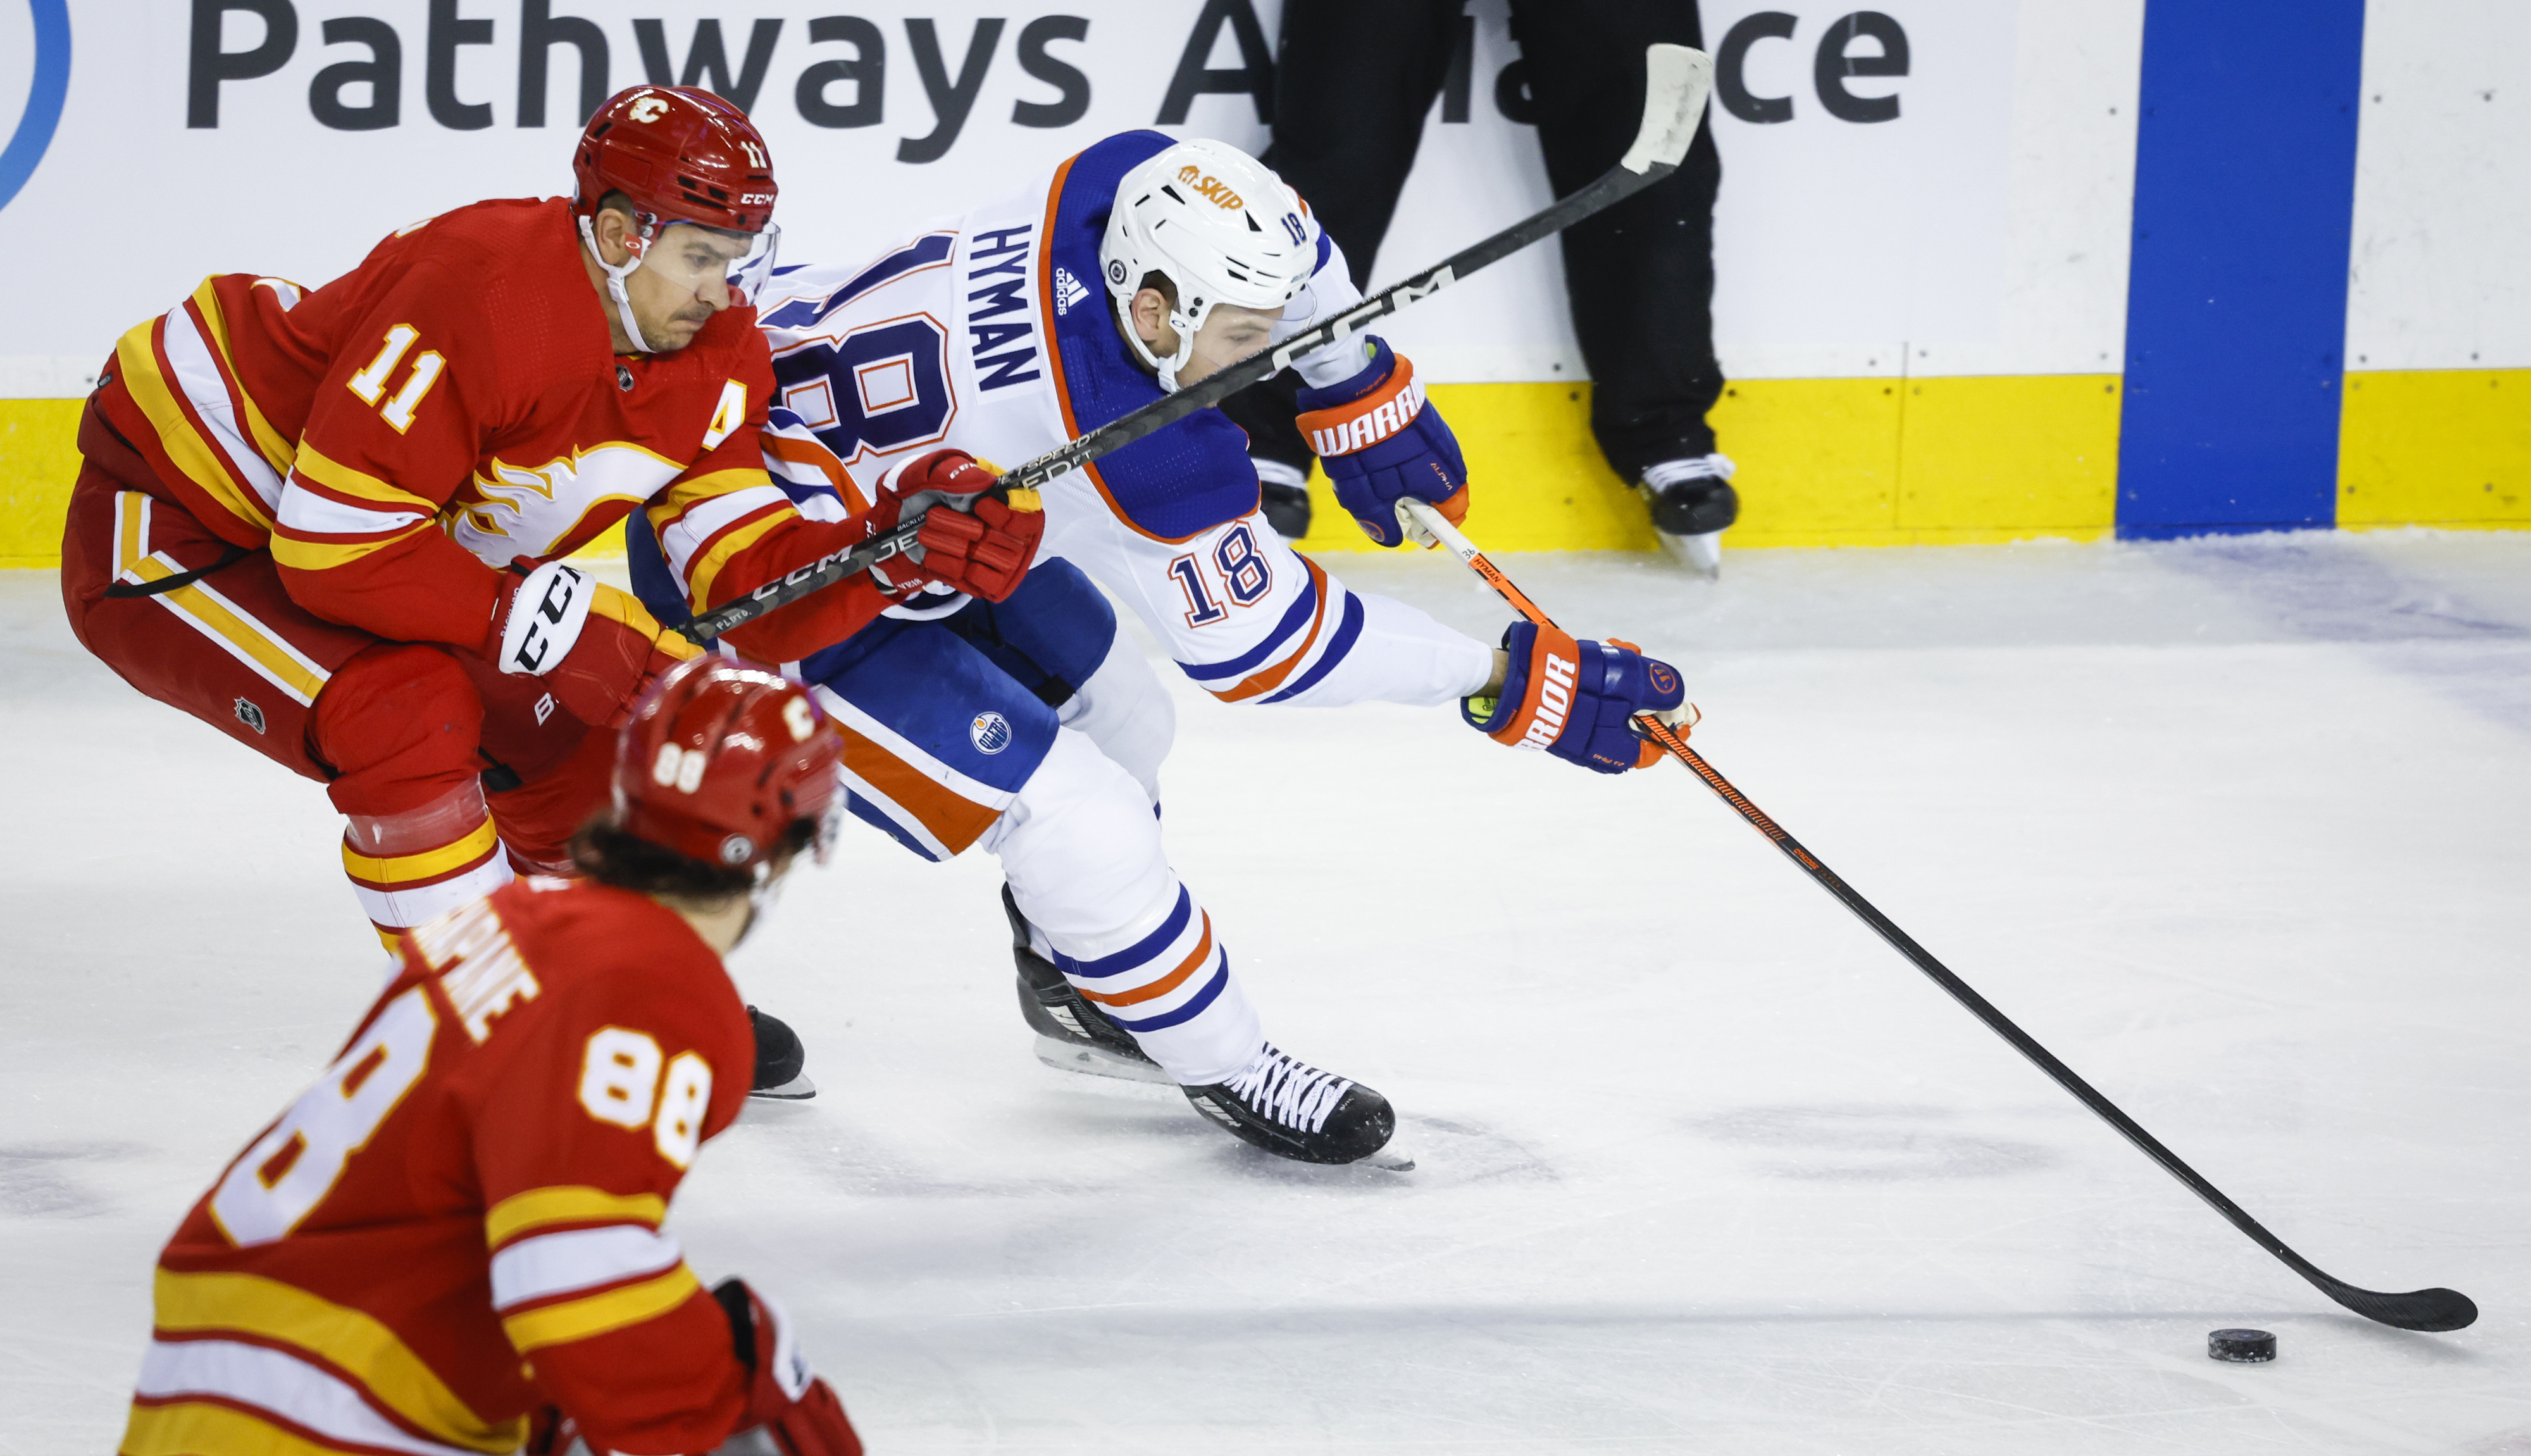 Edmonton Oilers cash in on late power play to burn Calgary Flames 2-1